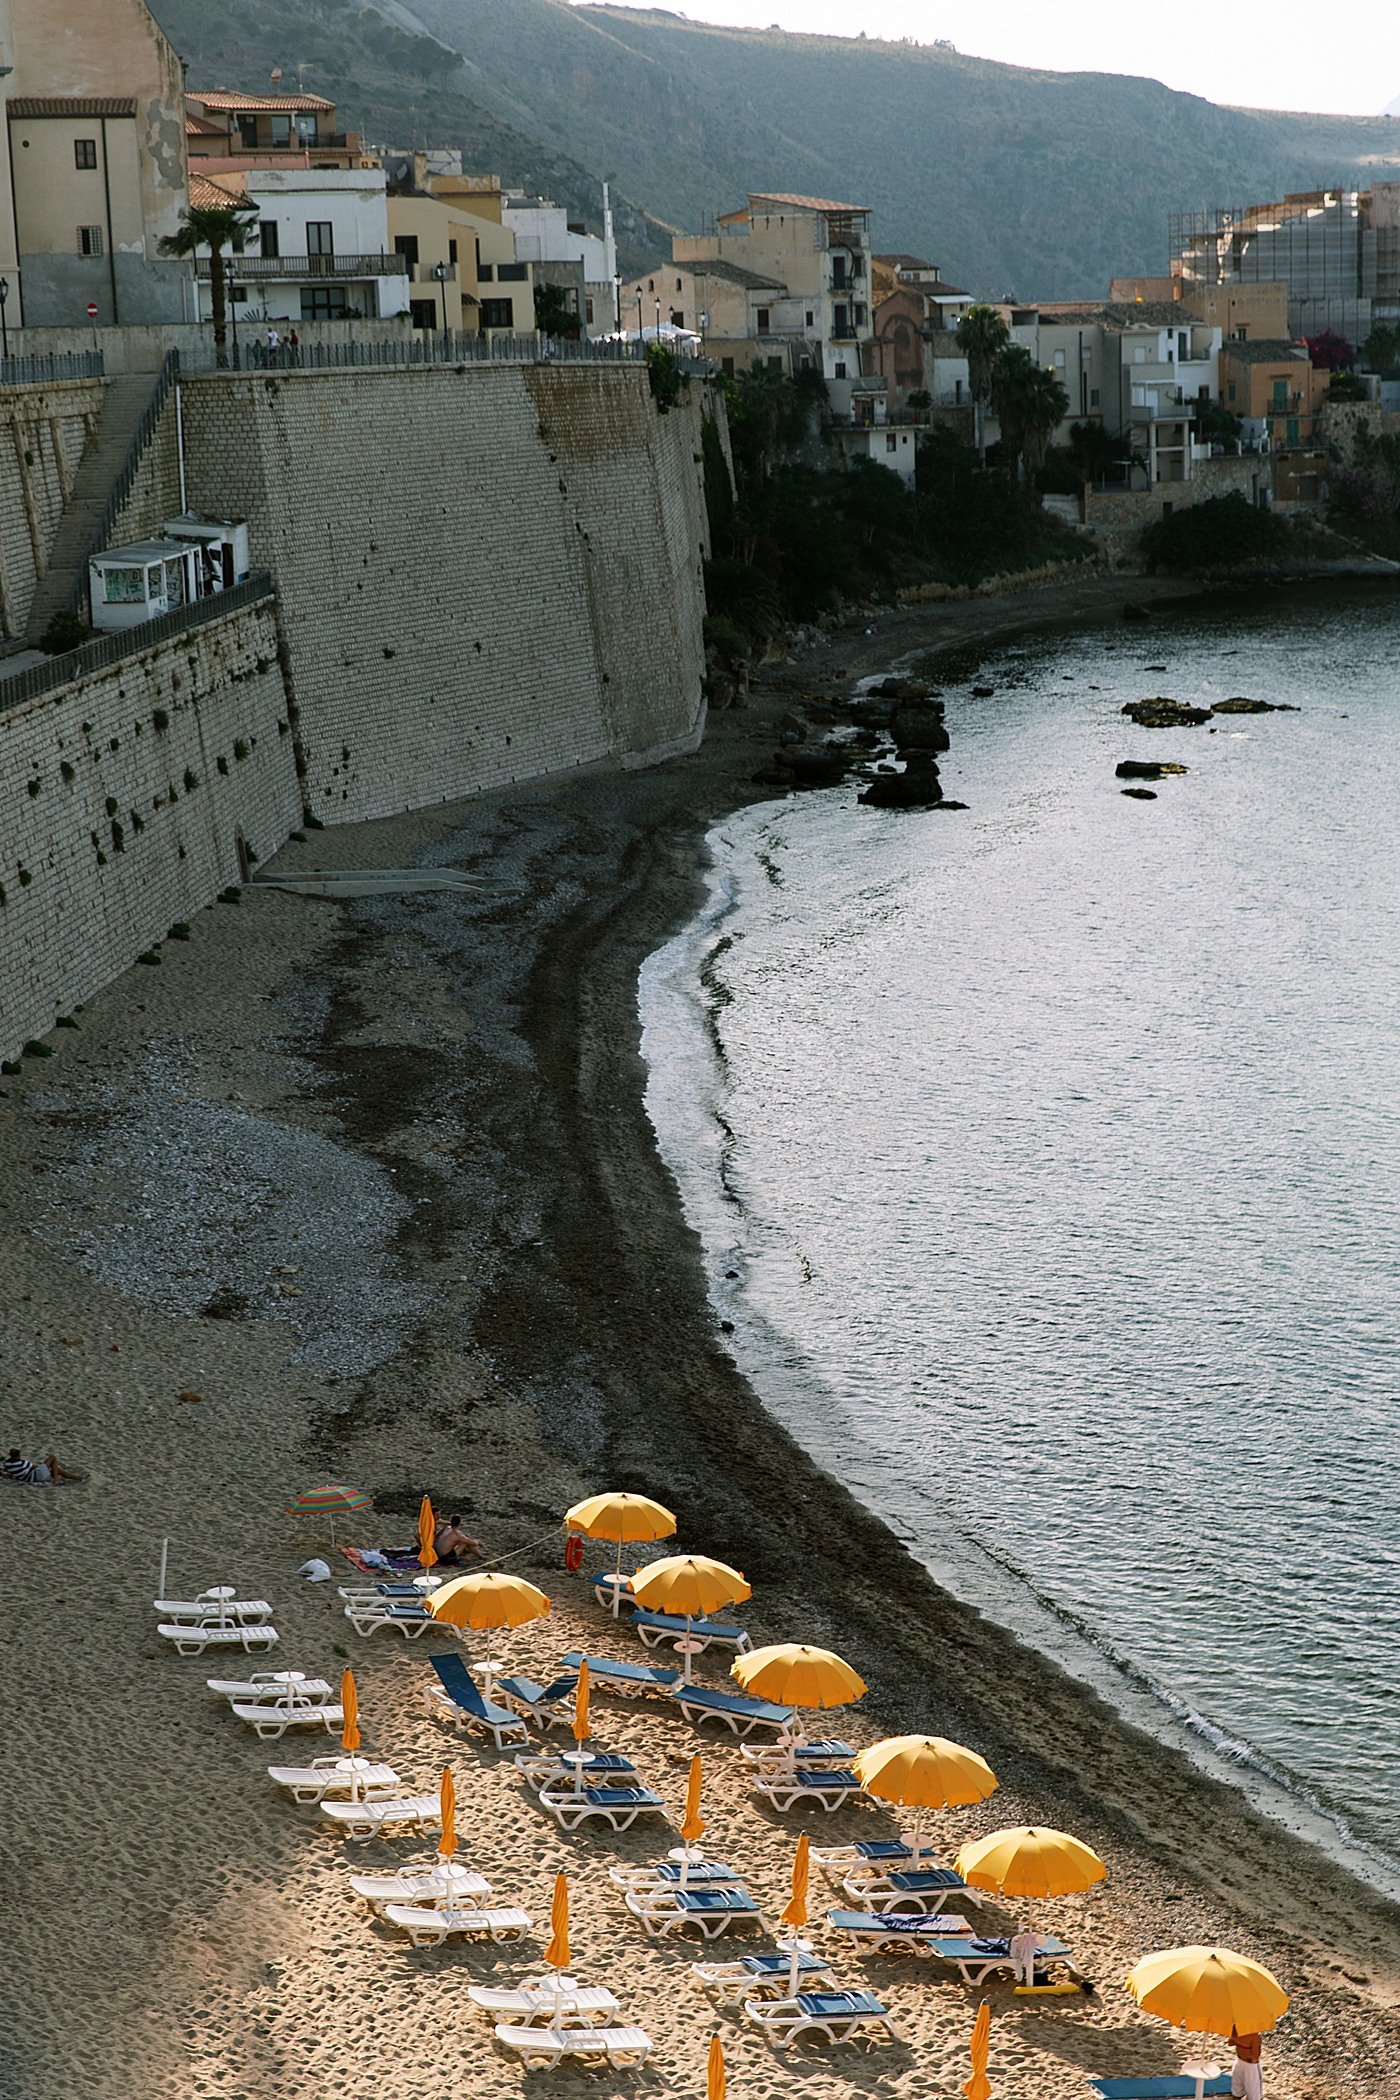 Yellow umbrellas on the beach of Cala Petròlo | Photo by Josie Derrick 